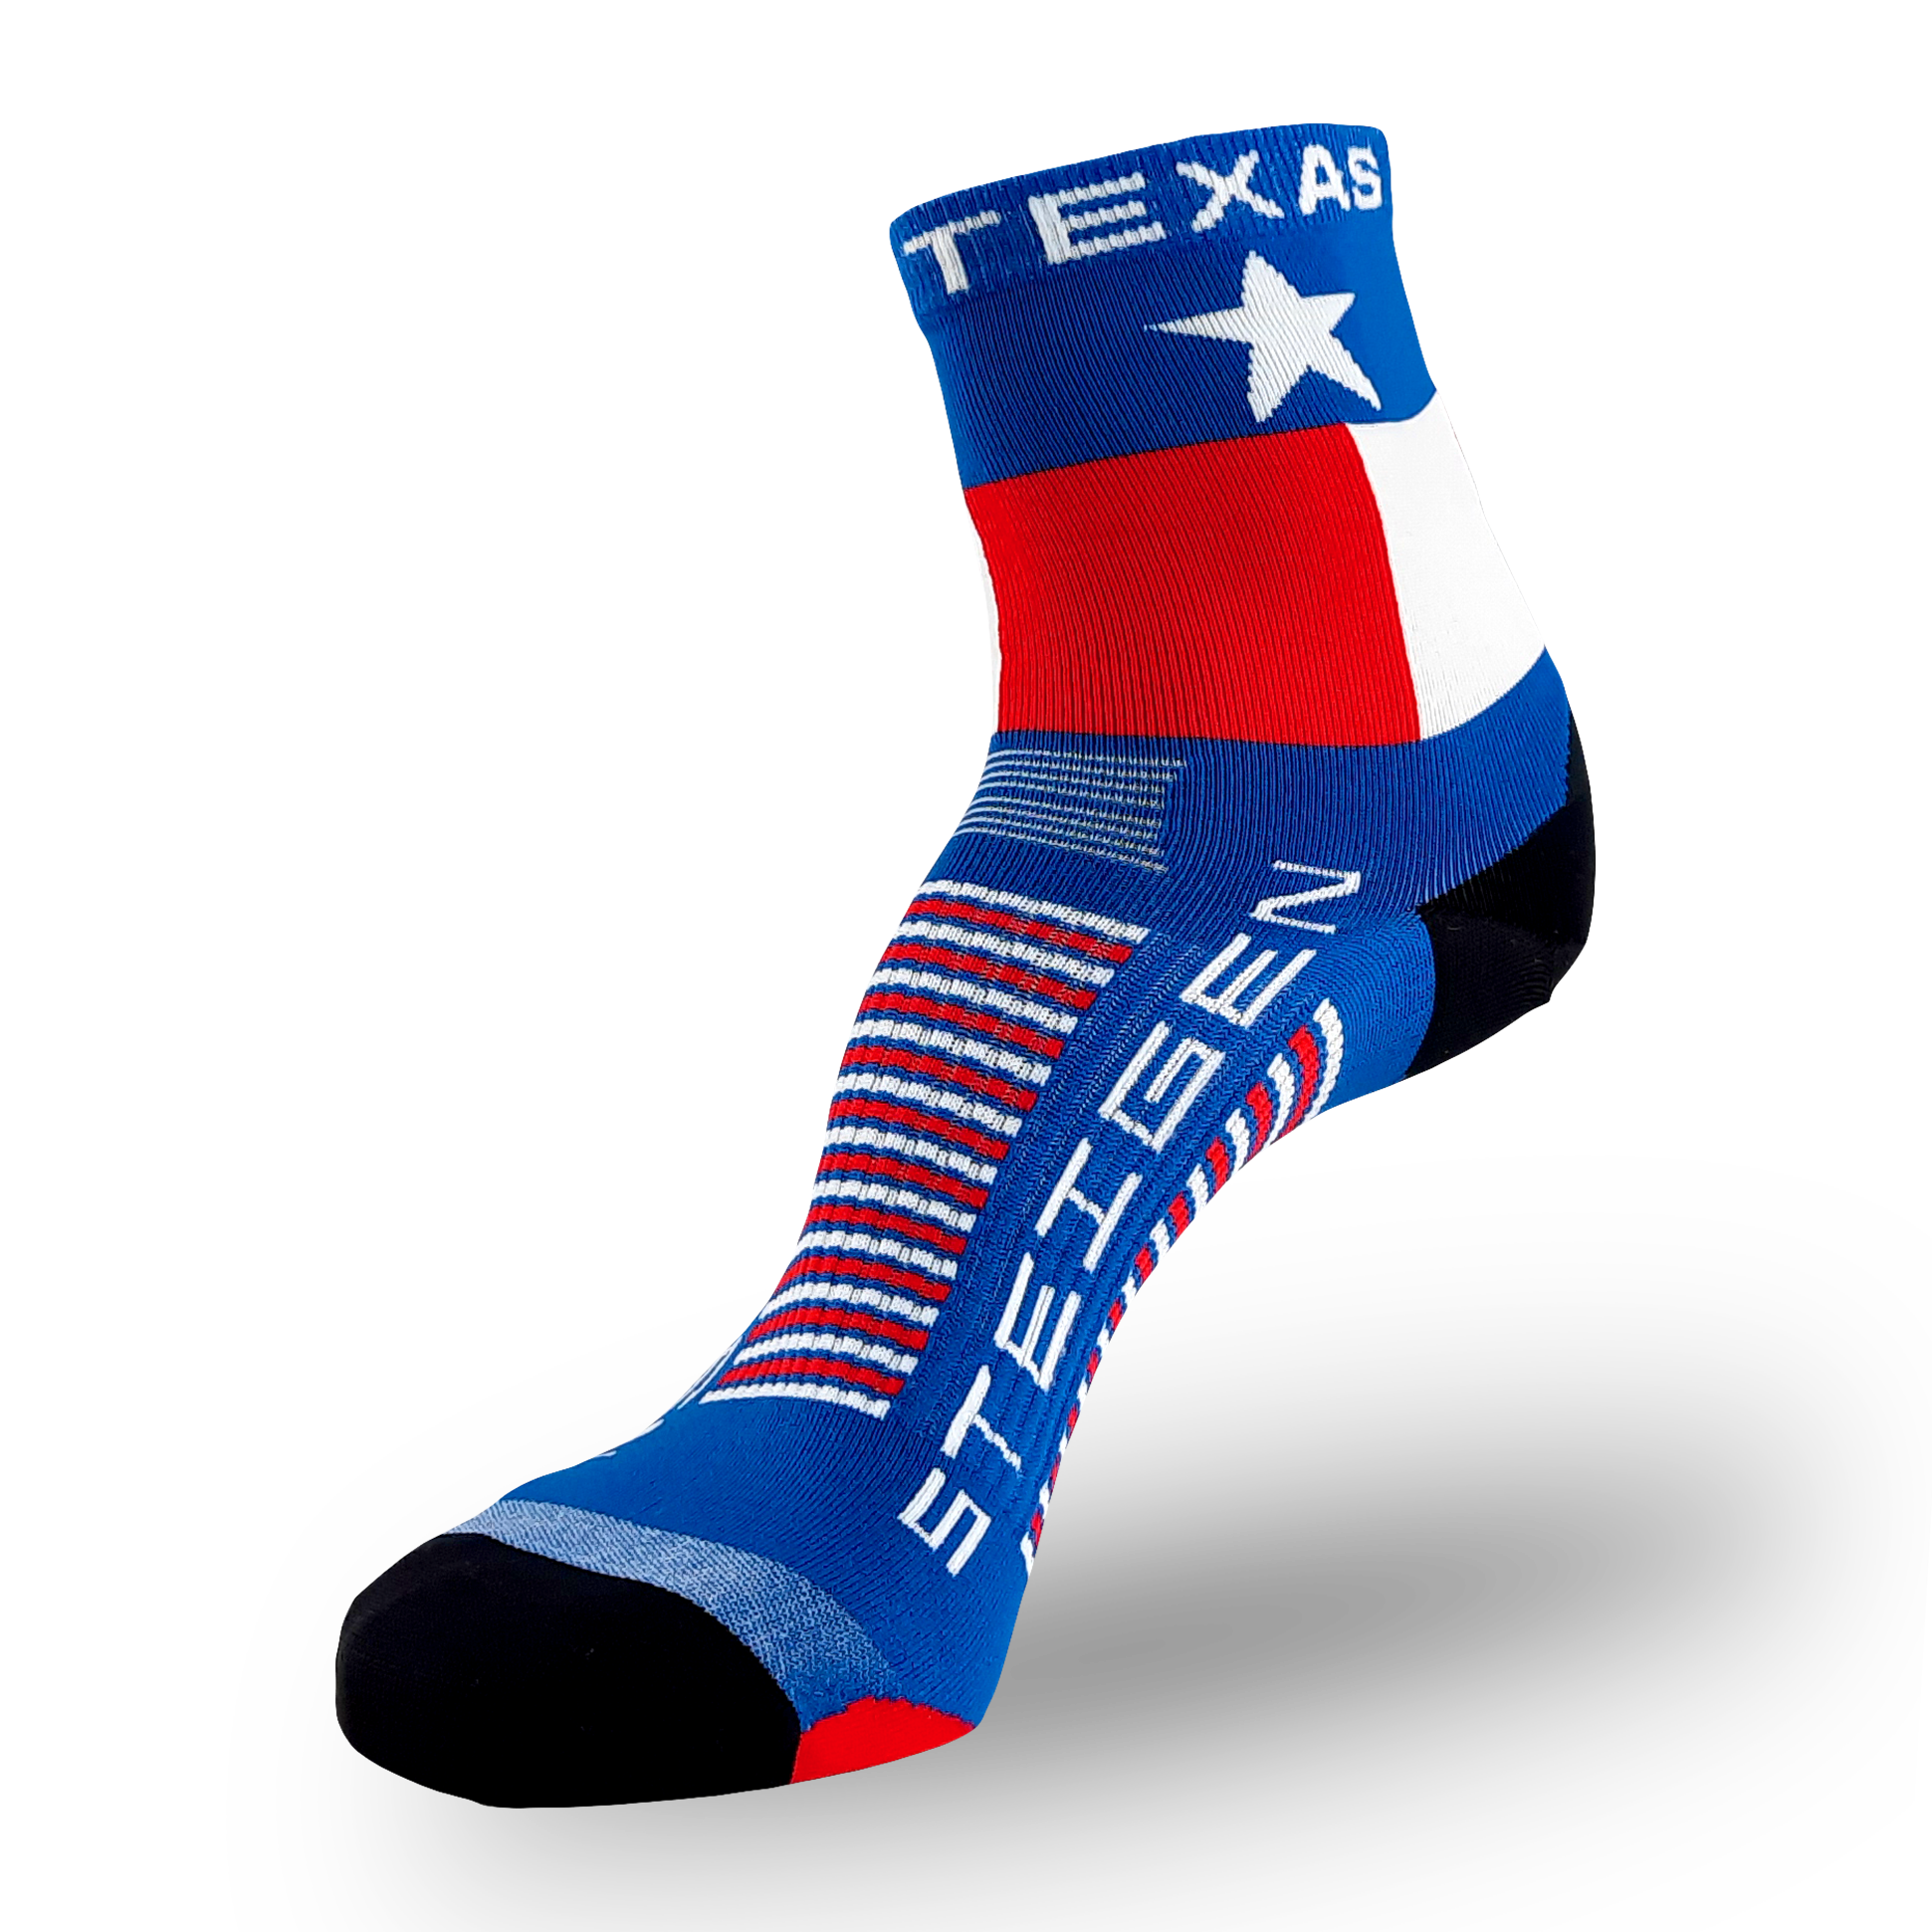 Texas Running Socks ½ Length